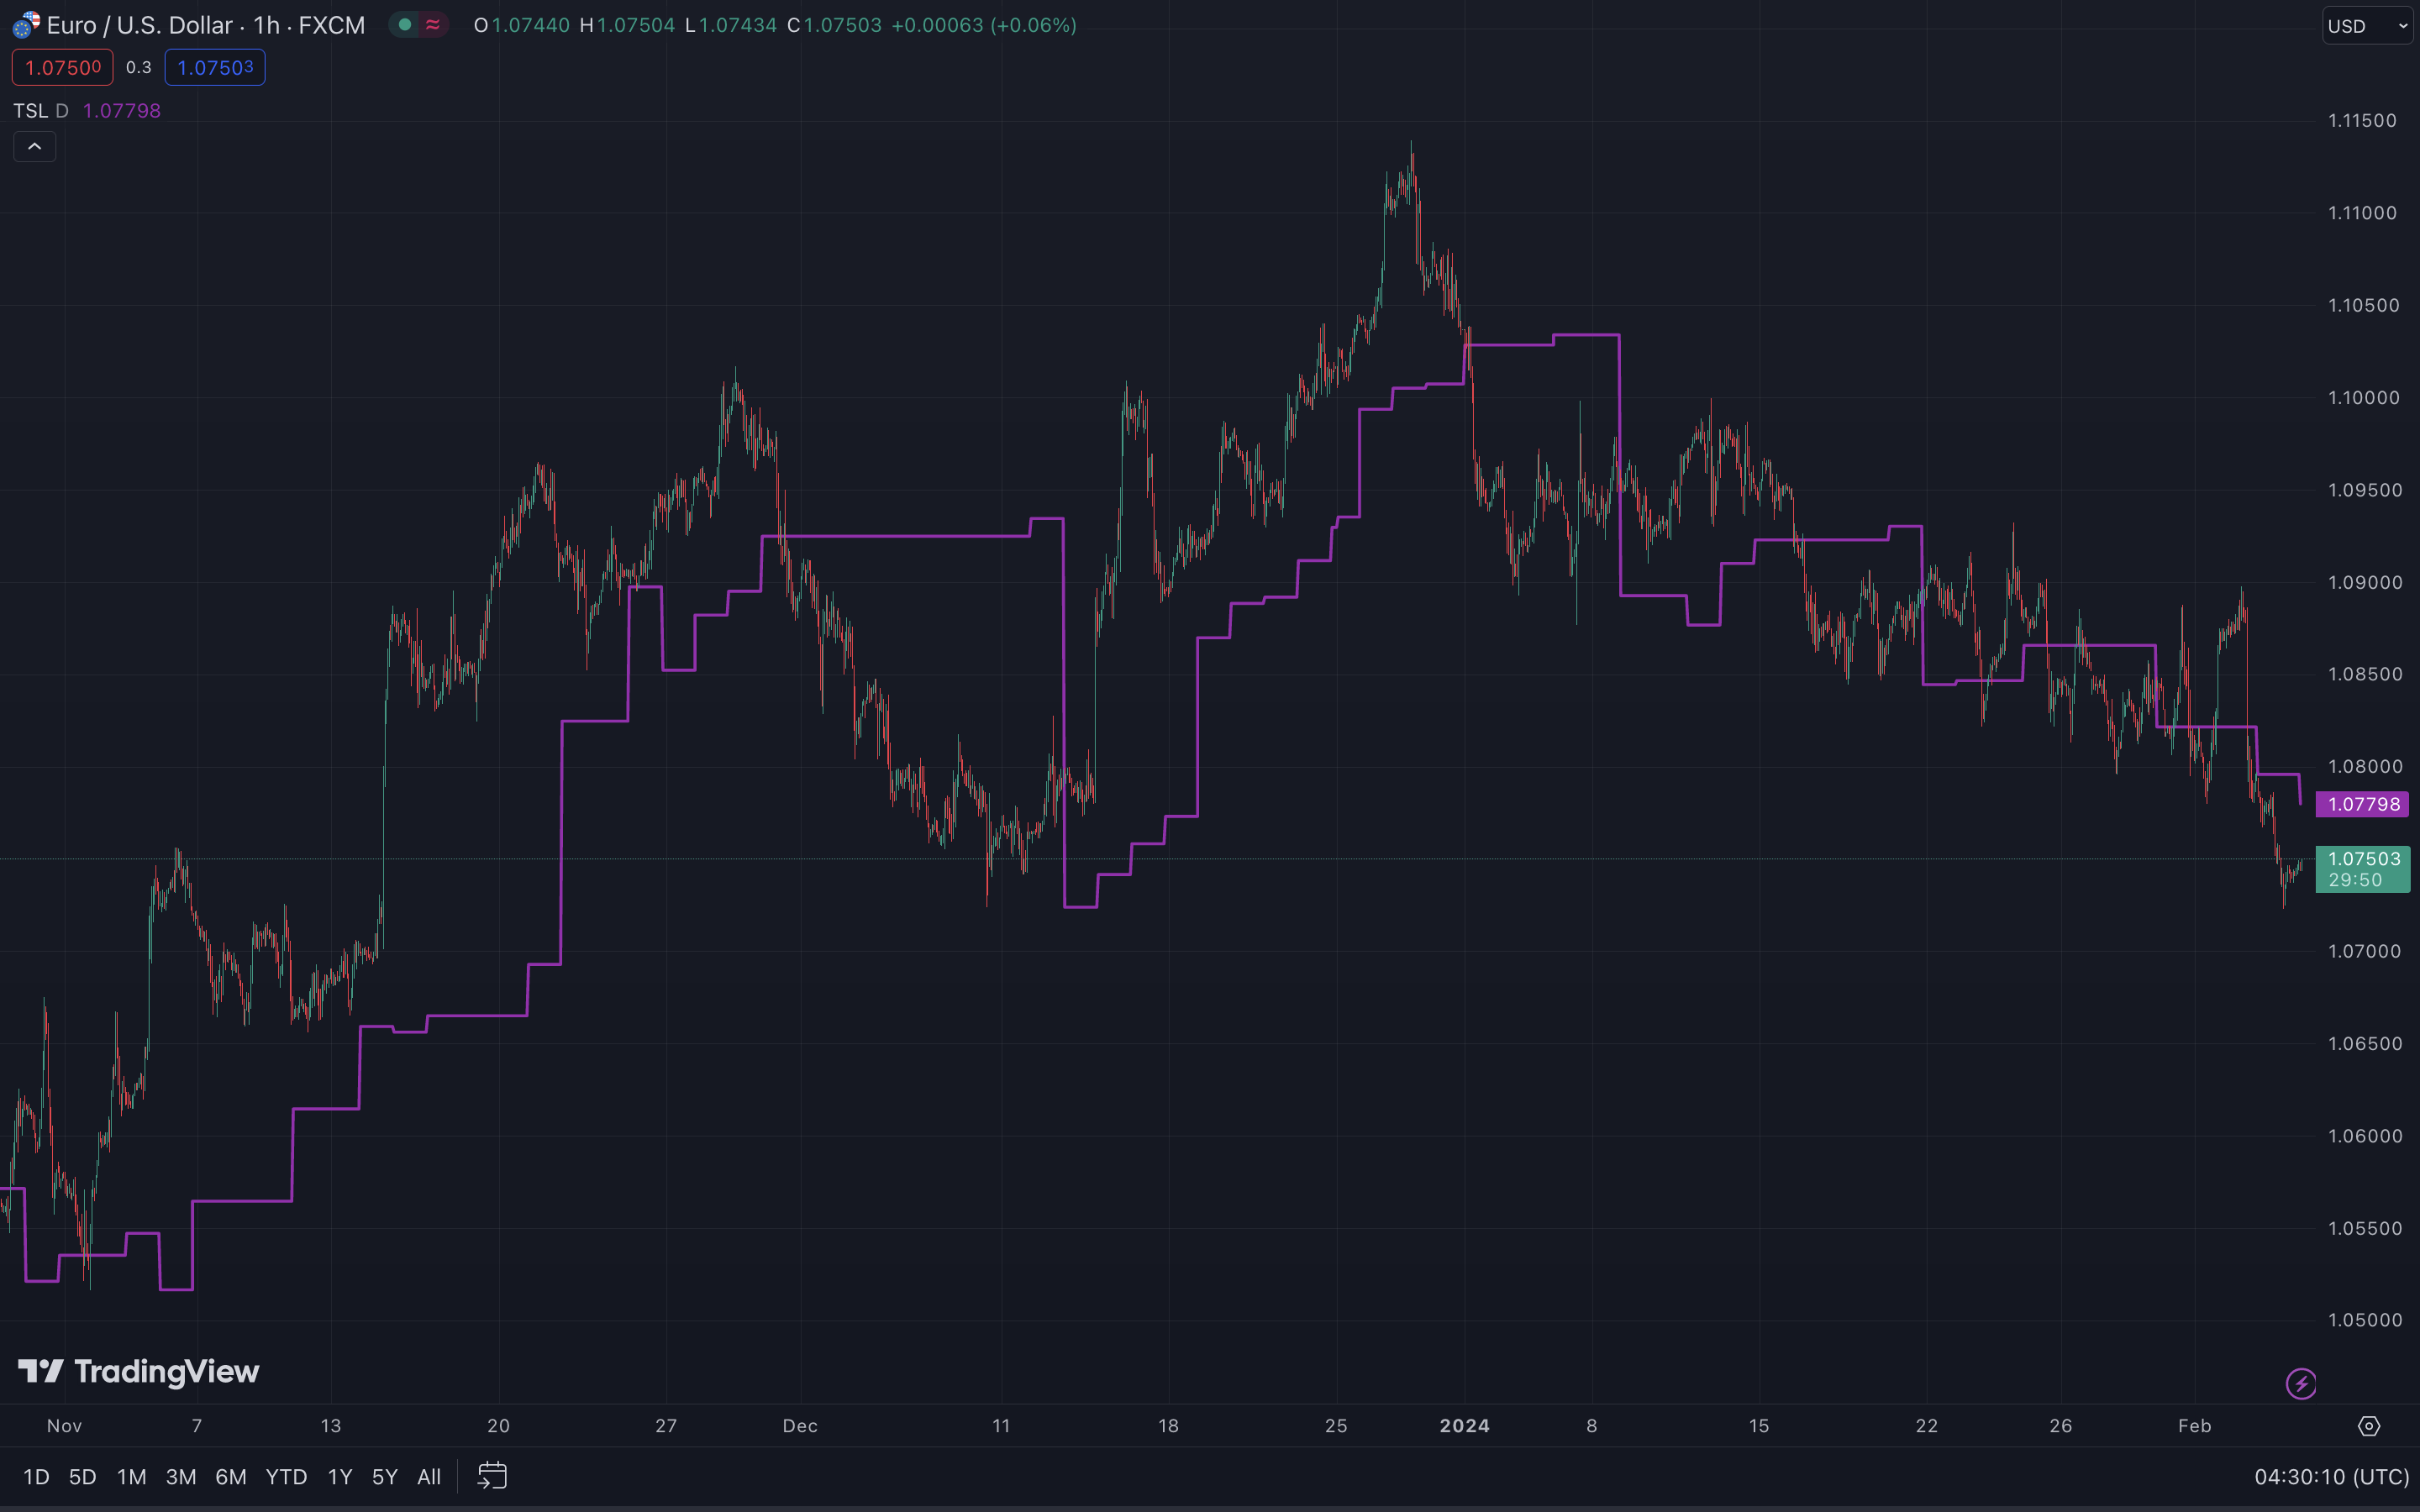 Trailing Stop Loss Indikator im Euro / US Dollar Chart auf TradingView.com